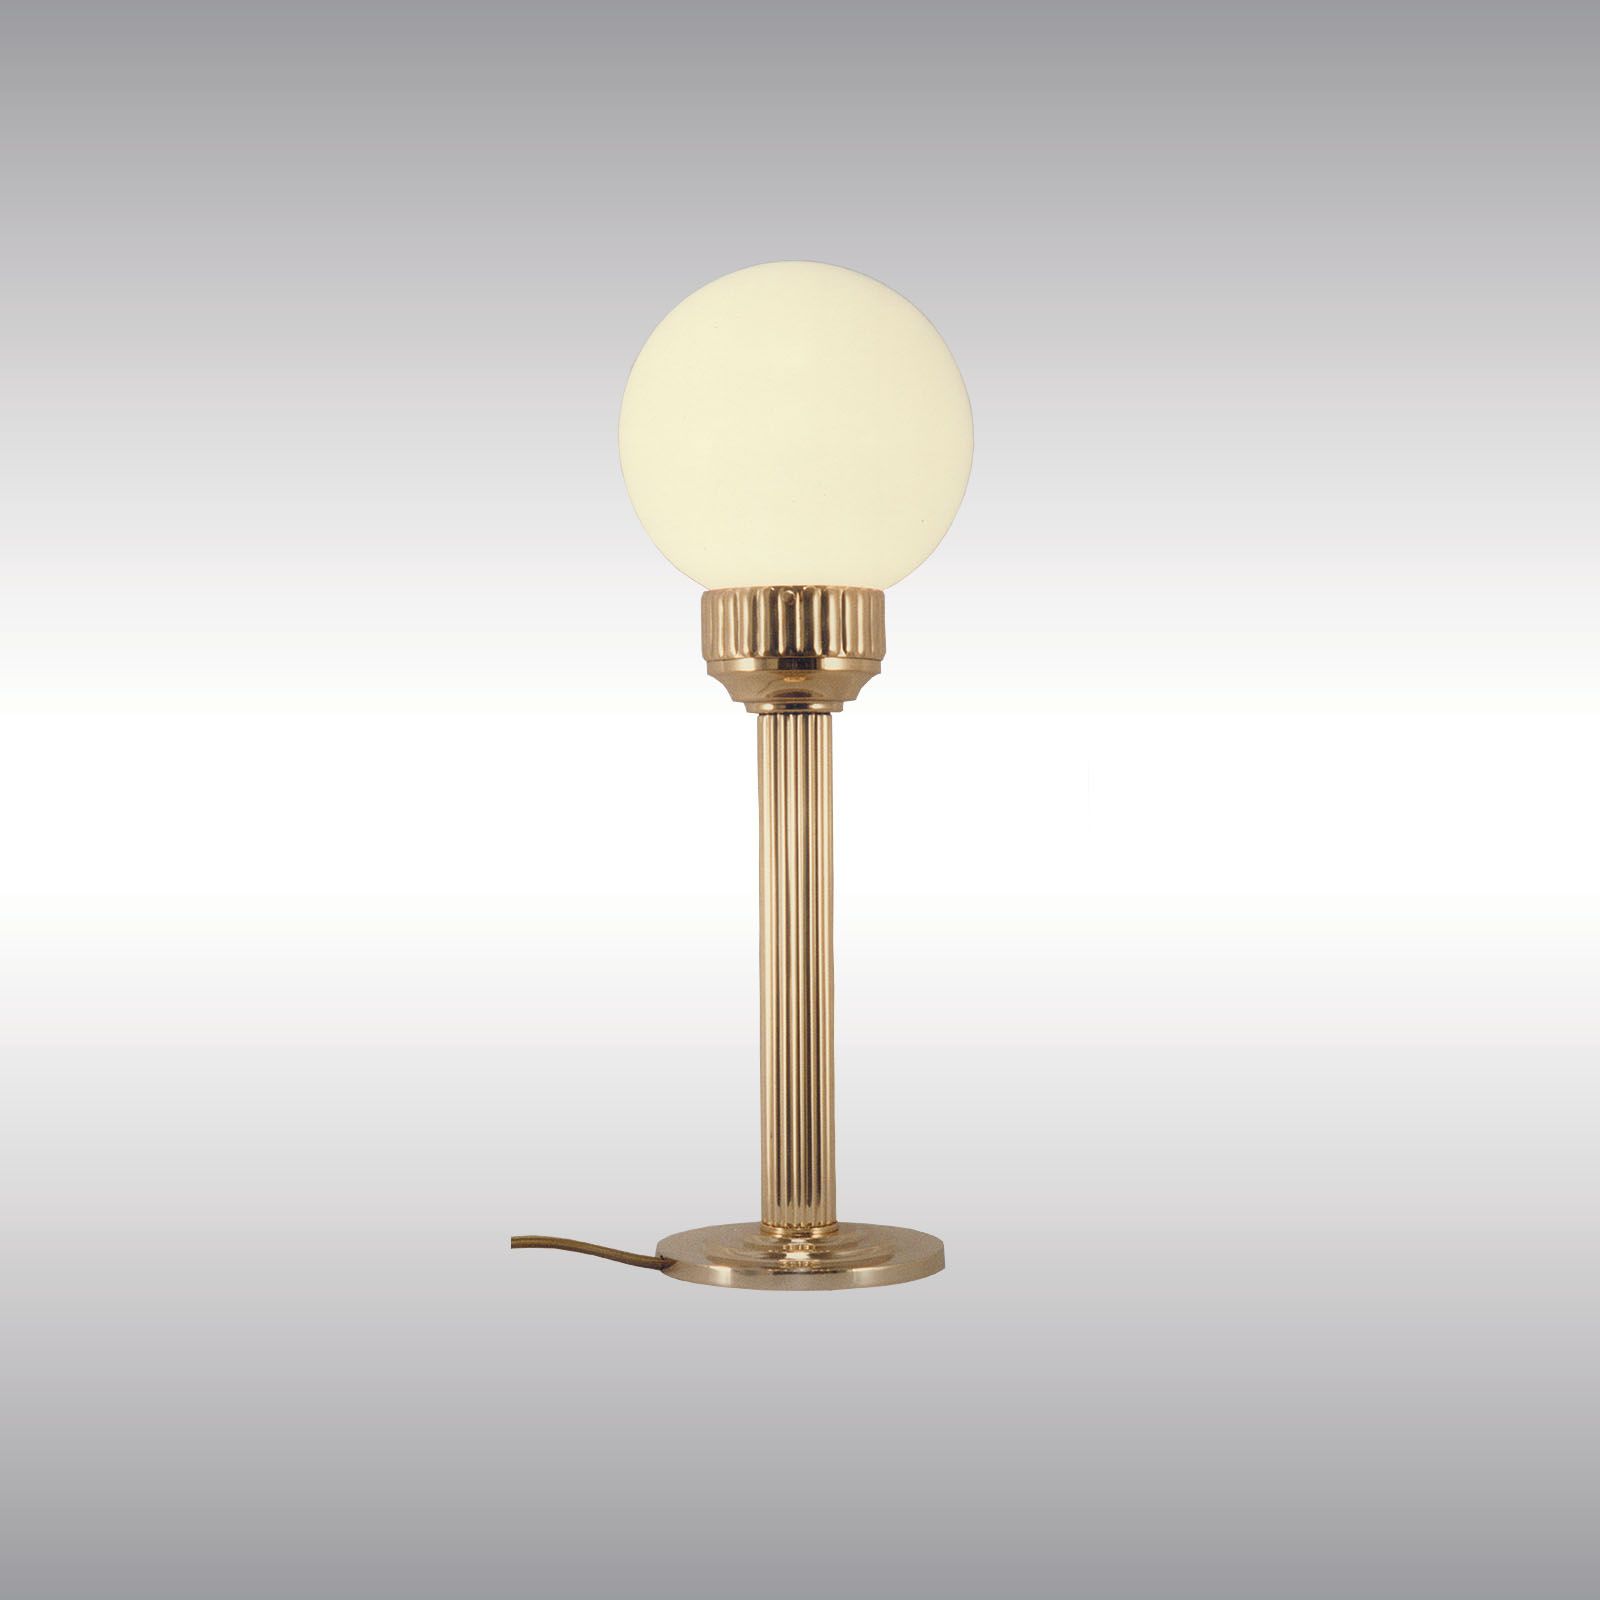 WOKA LAMPS VIENNA - OrderNr.: 12|AST4 - Design: WOKA